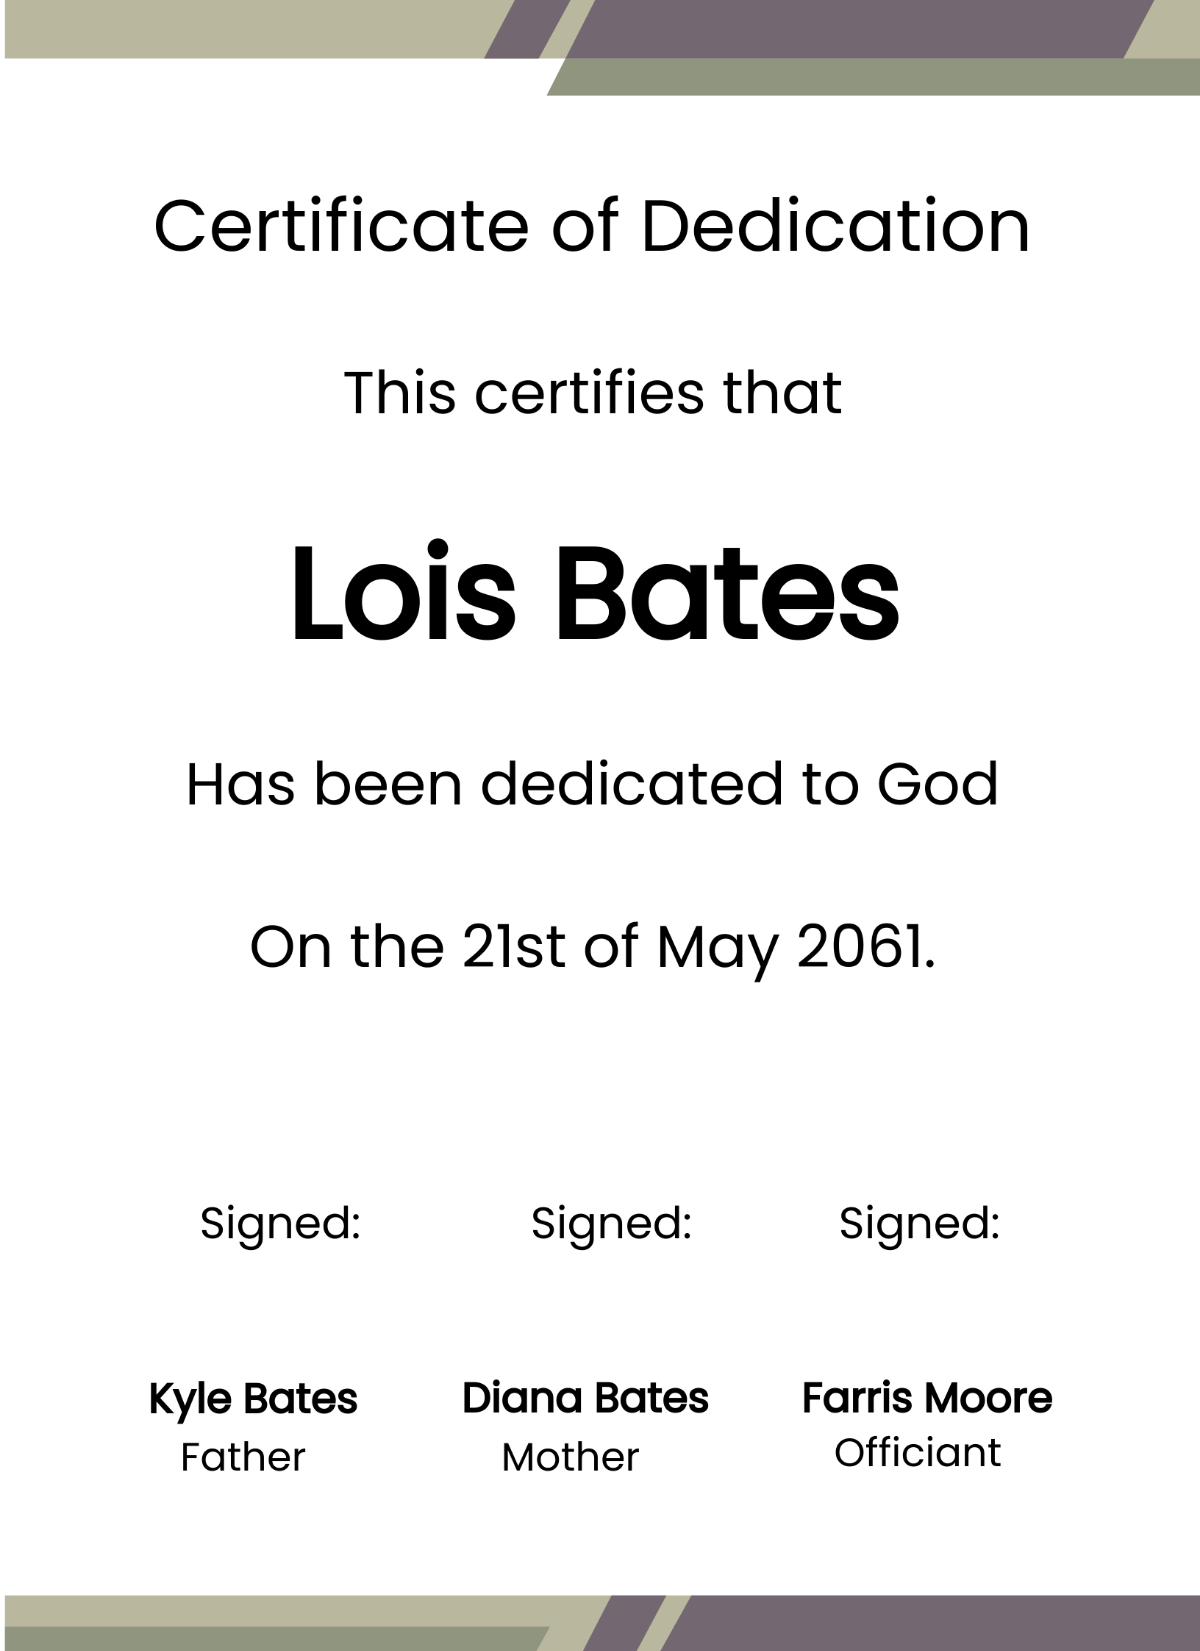 Child Dedication Certificate Template